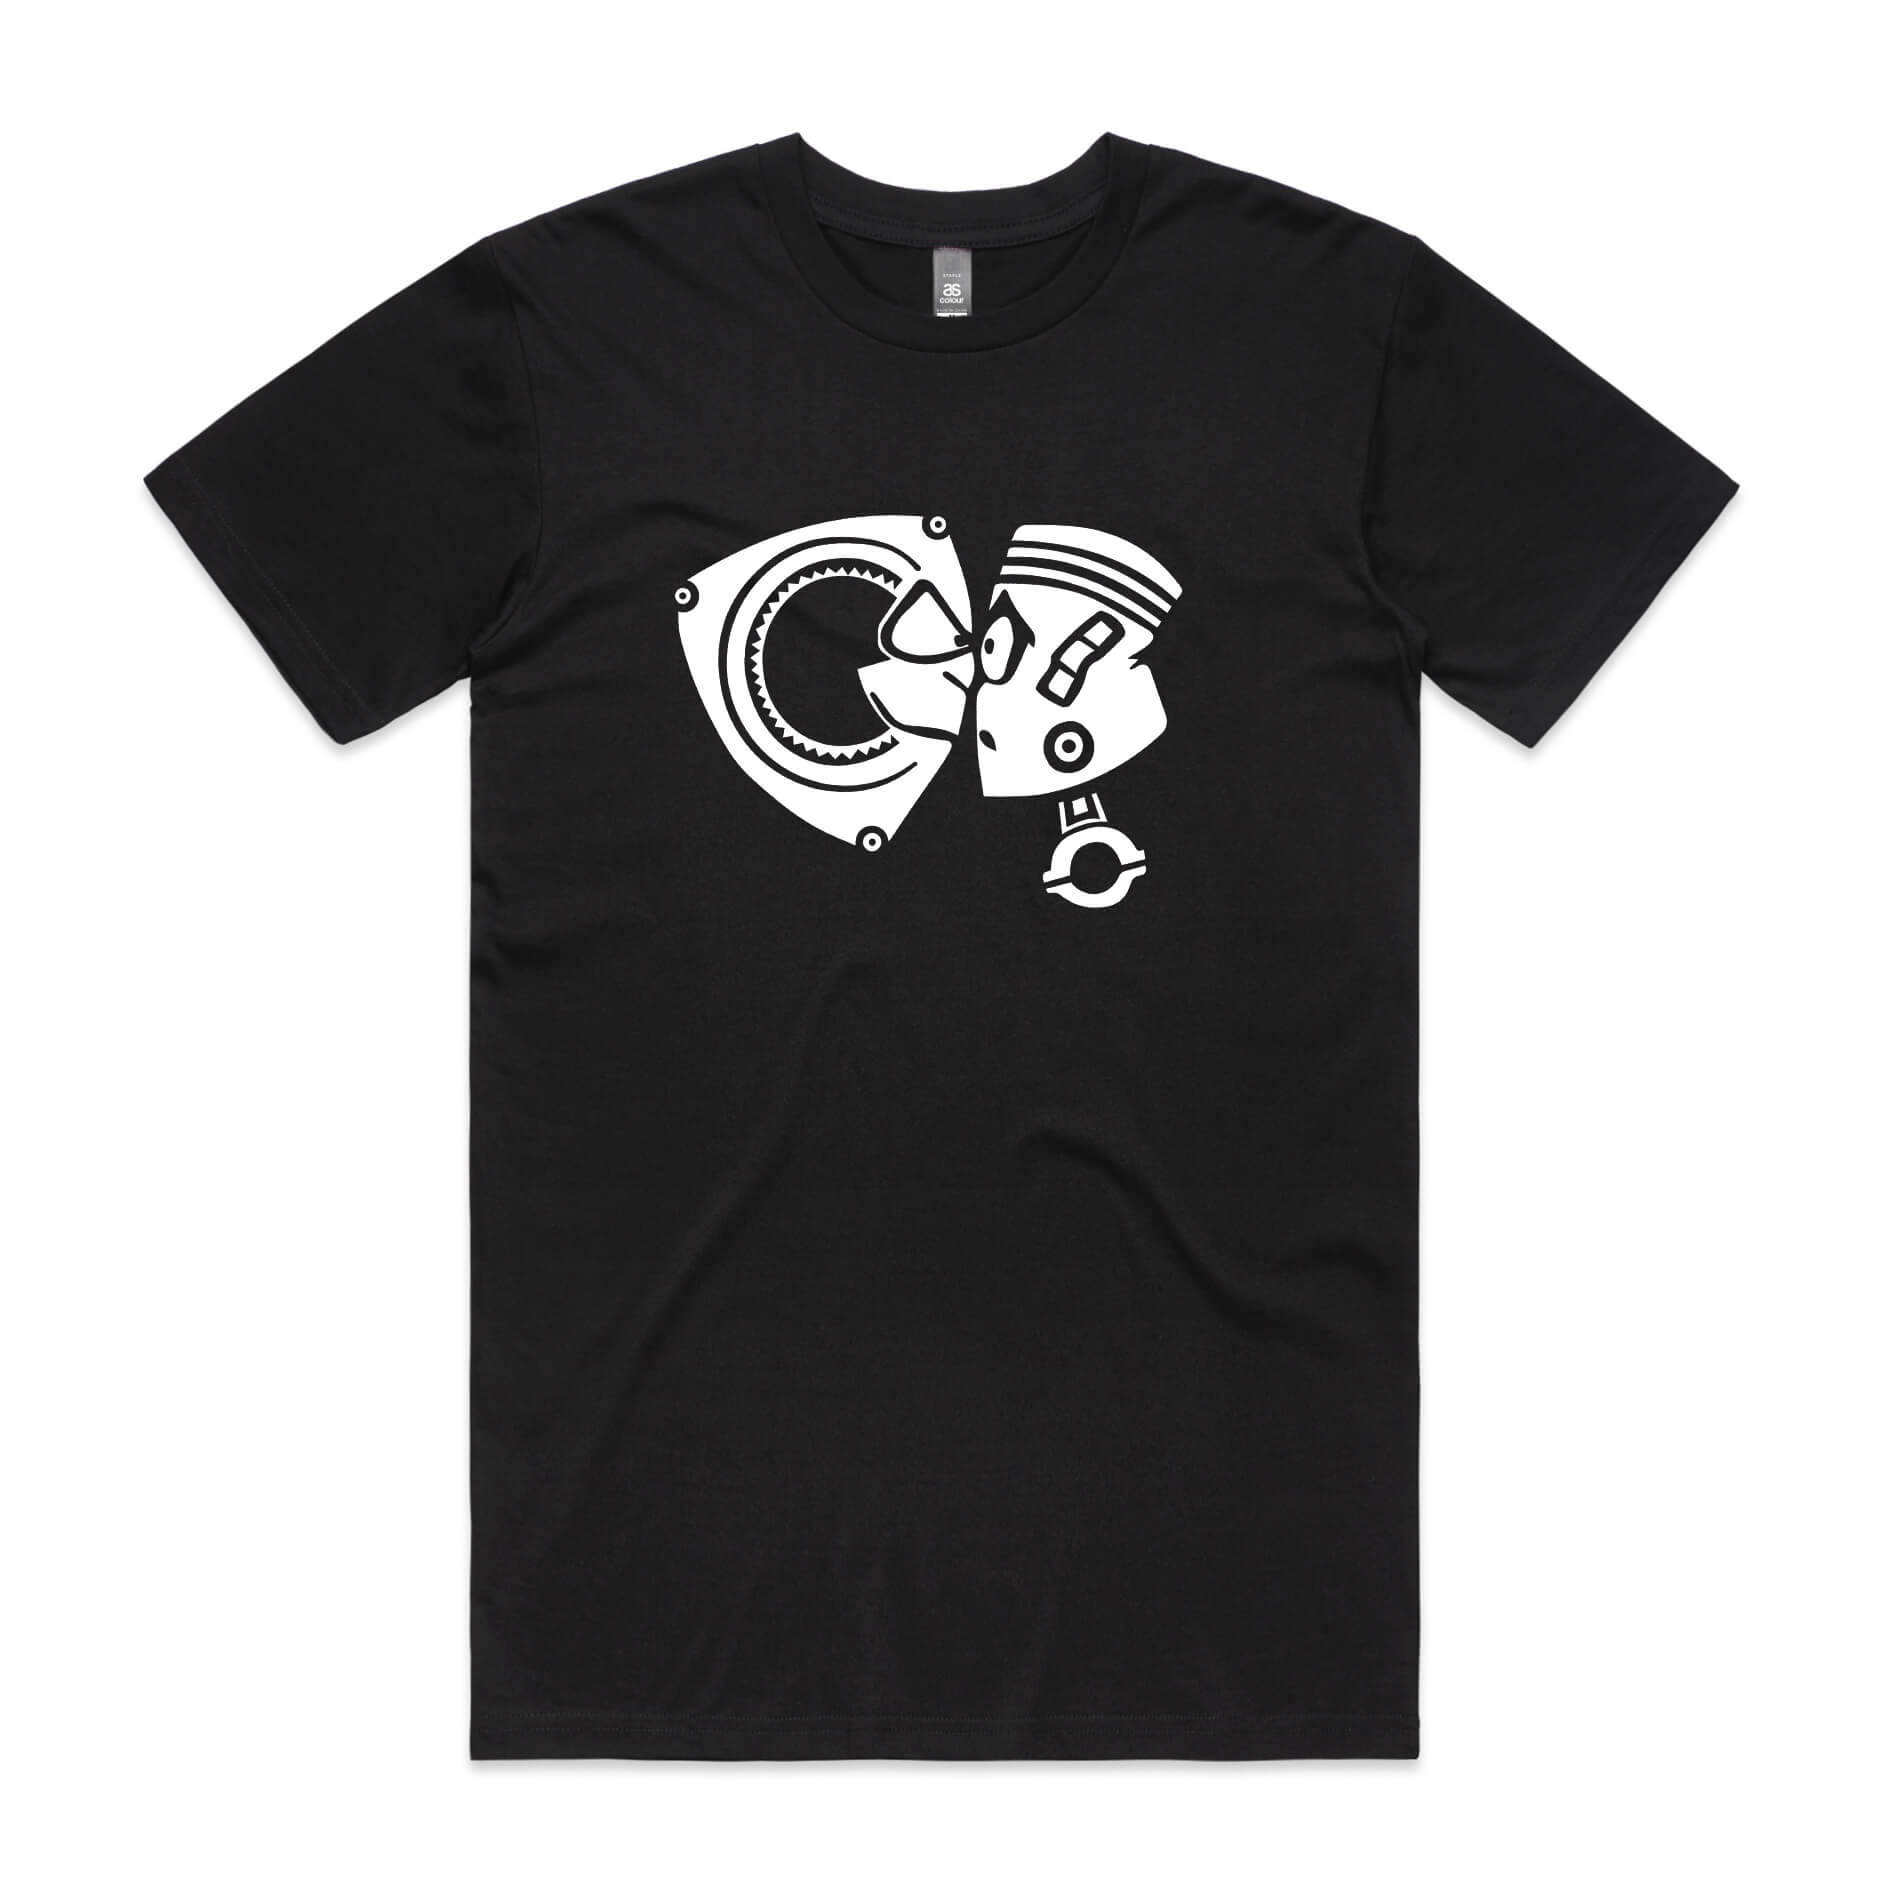 Rotary vs piston t-shirt in black with white cartoon graphic